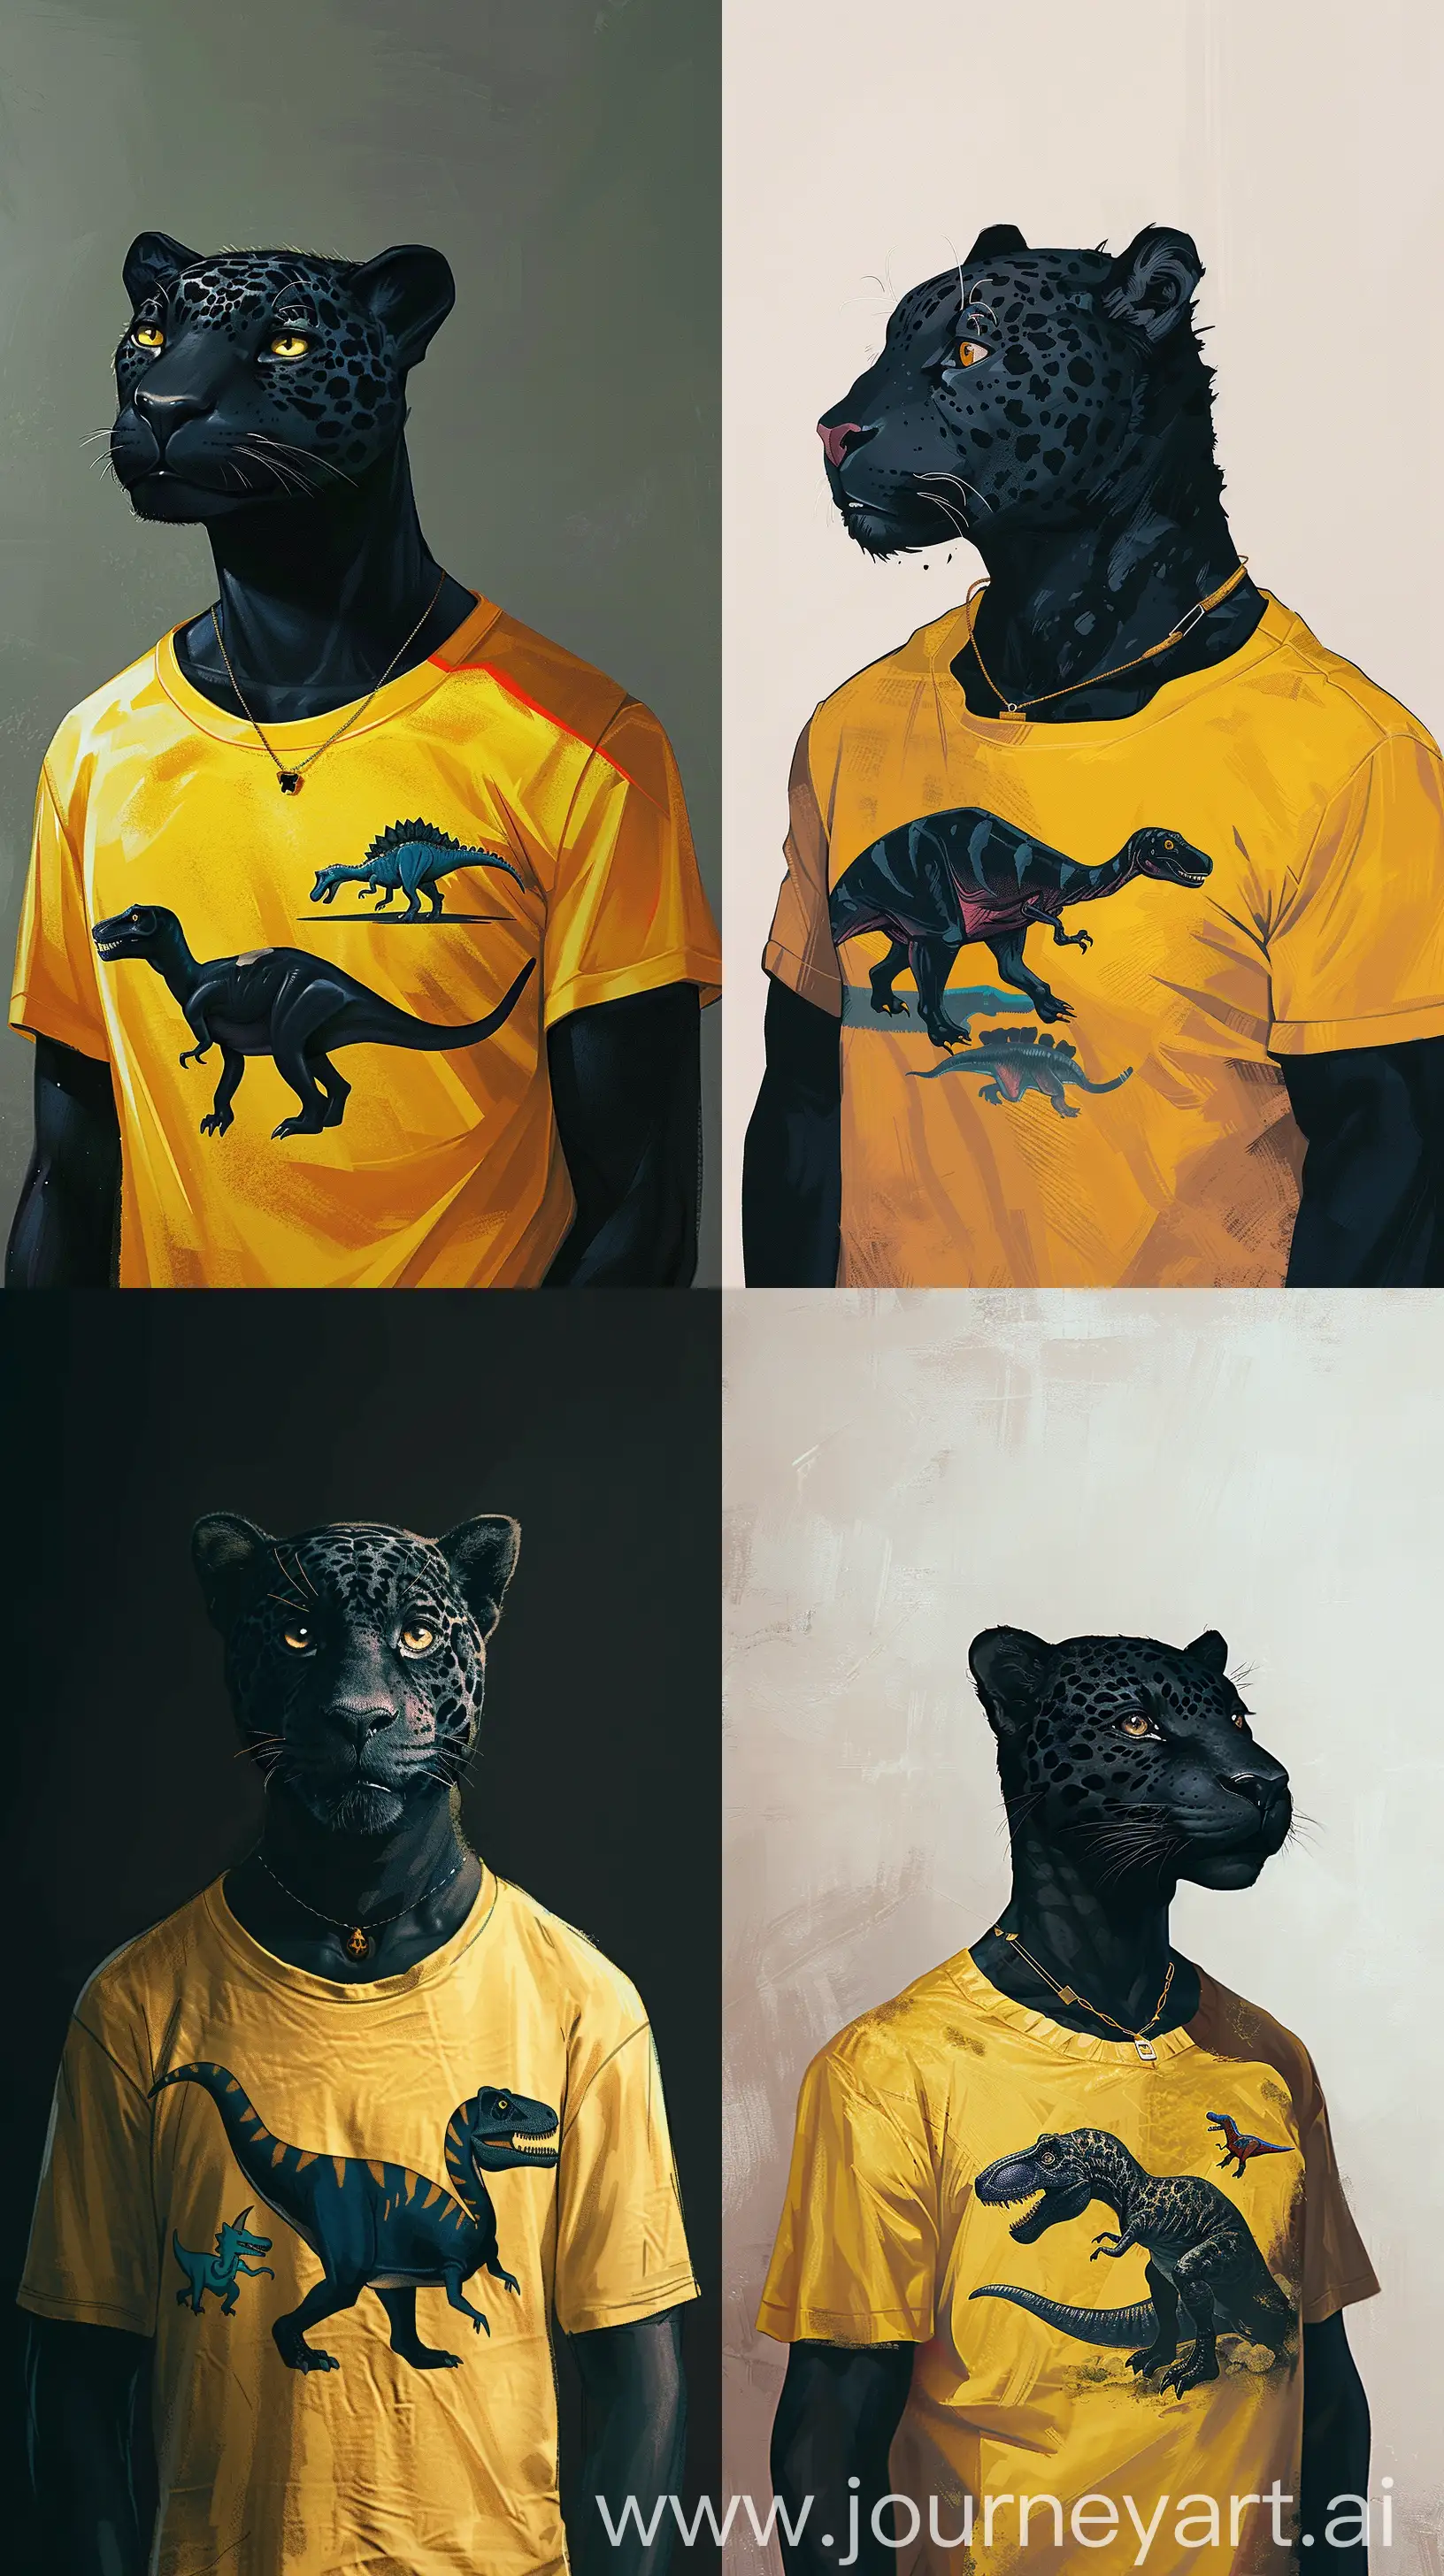 Surreal-Black-Jaguar-Man-in-William-Wry-Style-with-Dinosaur-Tshirt-Phone-Wallpaper